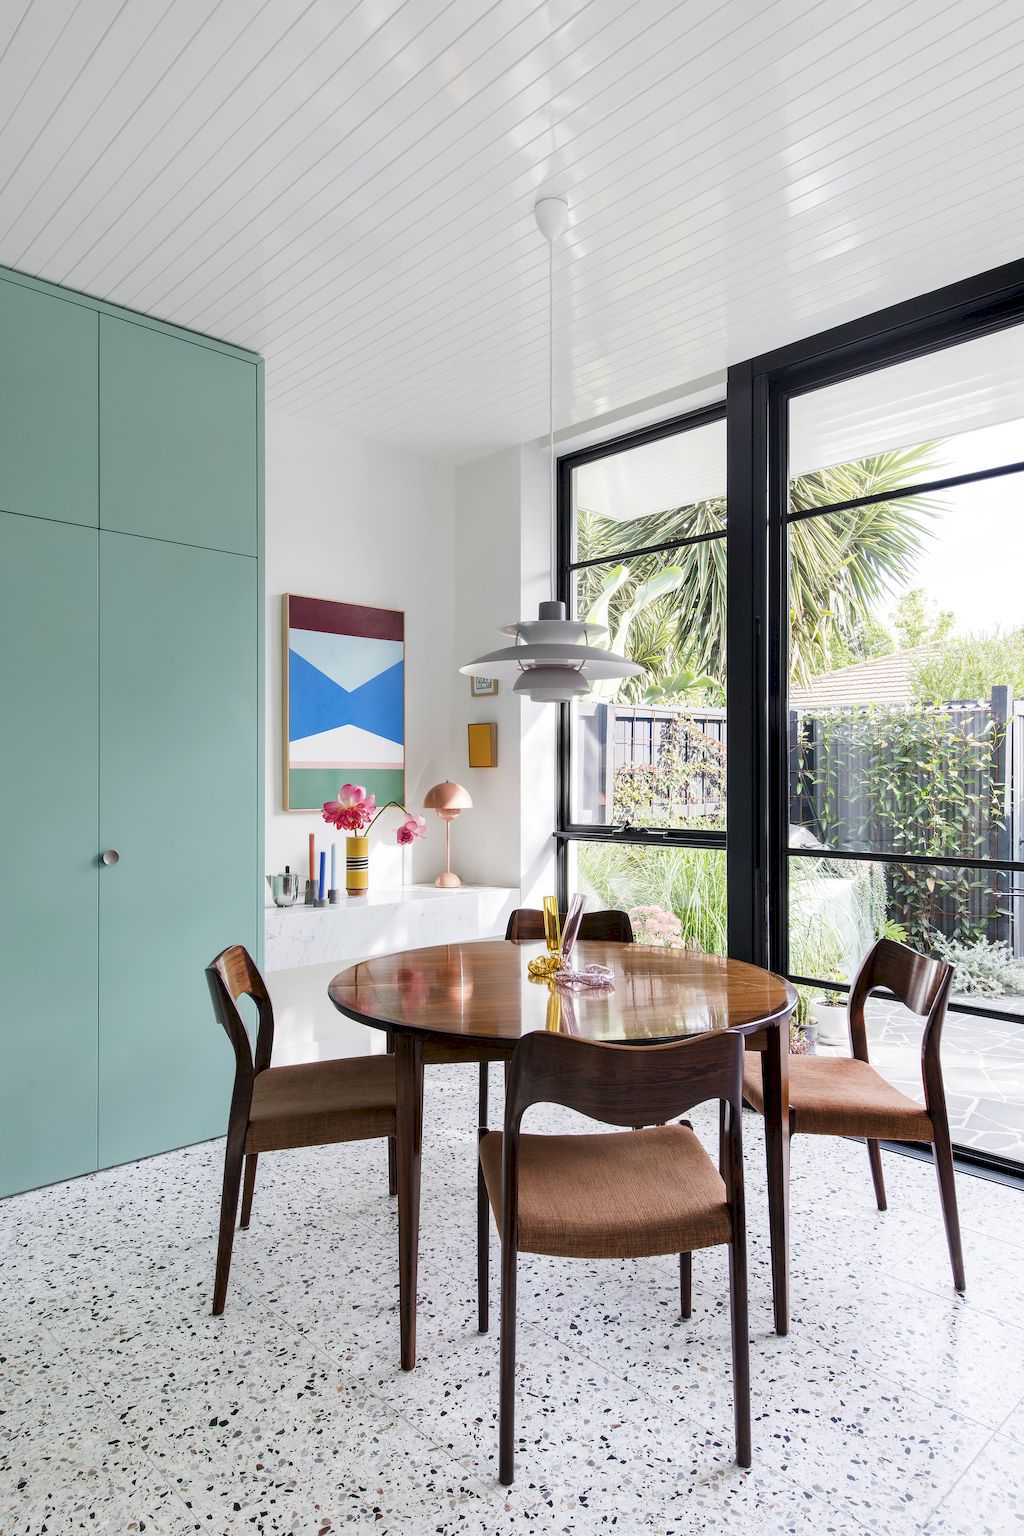 Flemington-house-Minty-fresh-addition-in-Australia-by-Lisa-Breeze-Architect-5